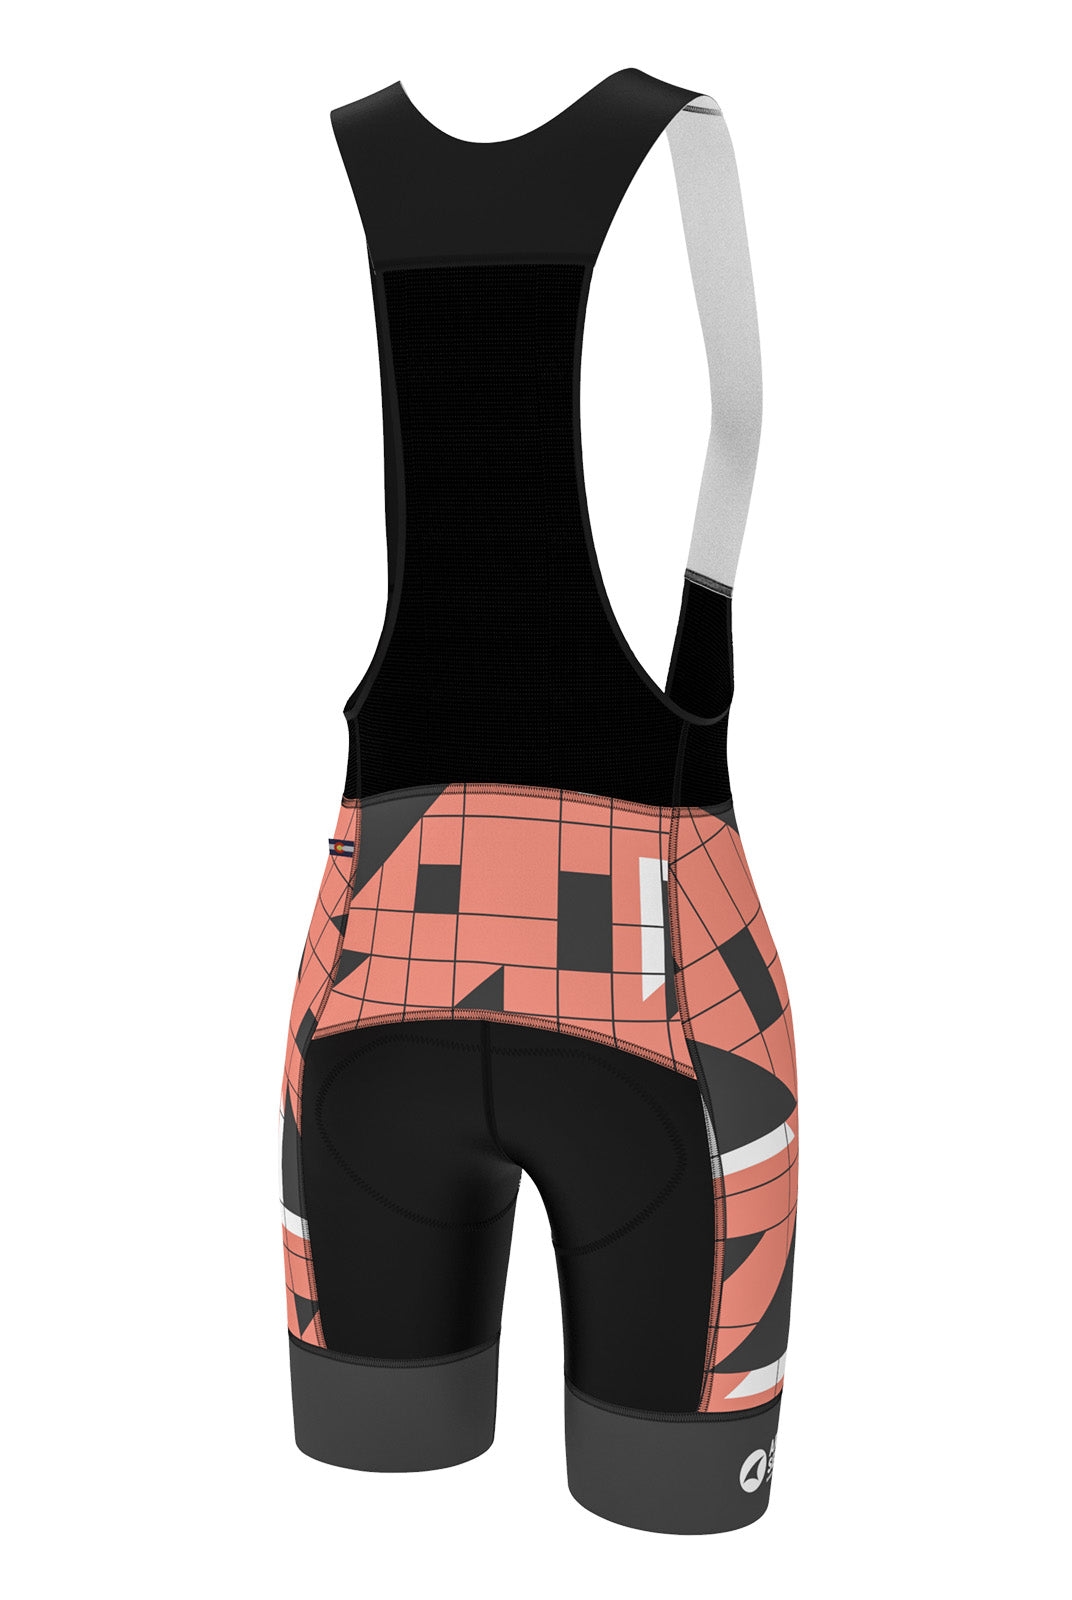 Women's Cycling Bib Shorts - Red Sandra Fettingis Design - Back View